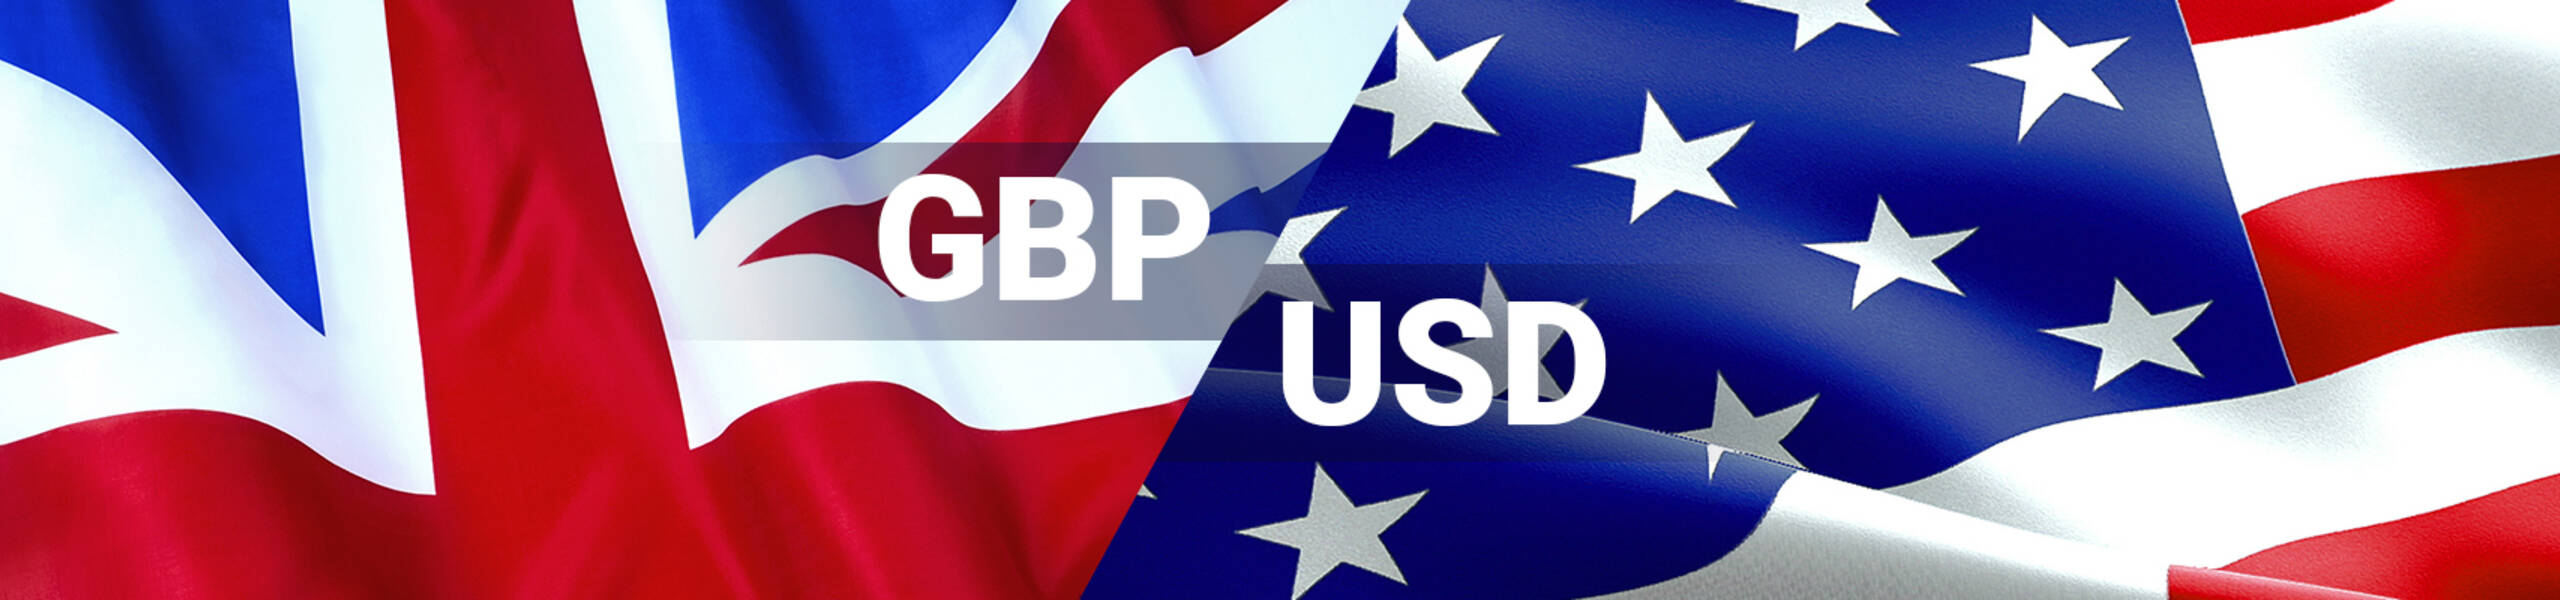 GBP/USD: pound returned to negative area